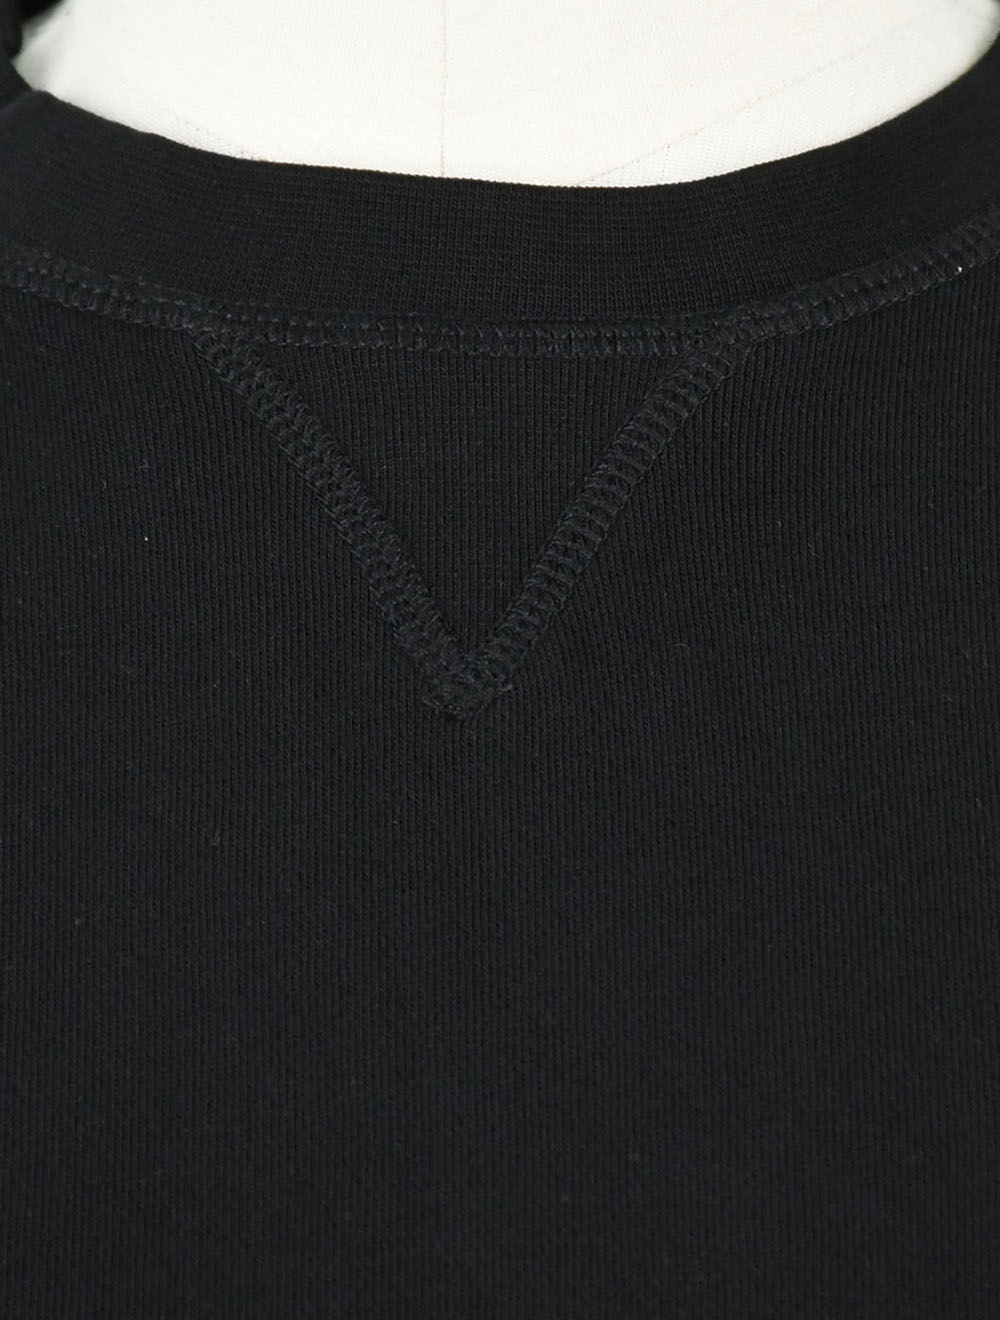 Hugo Boss Black Cotton Sweater